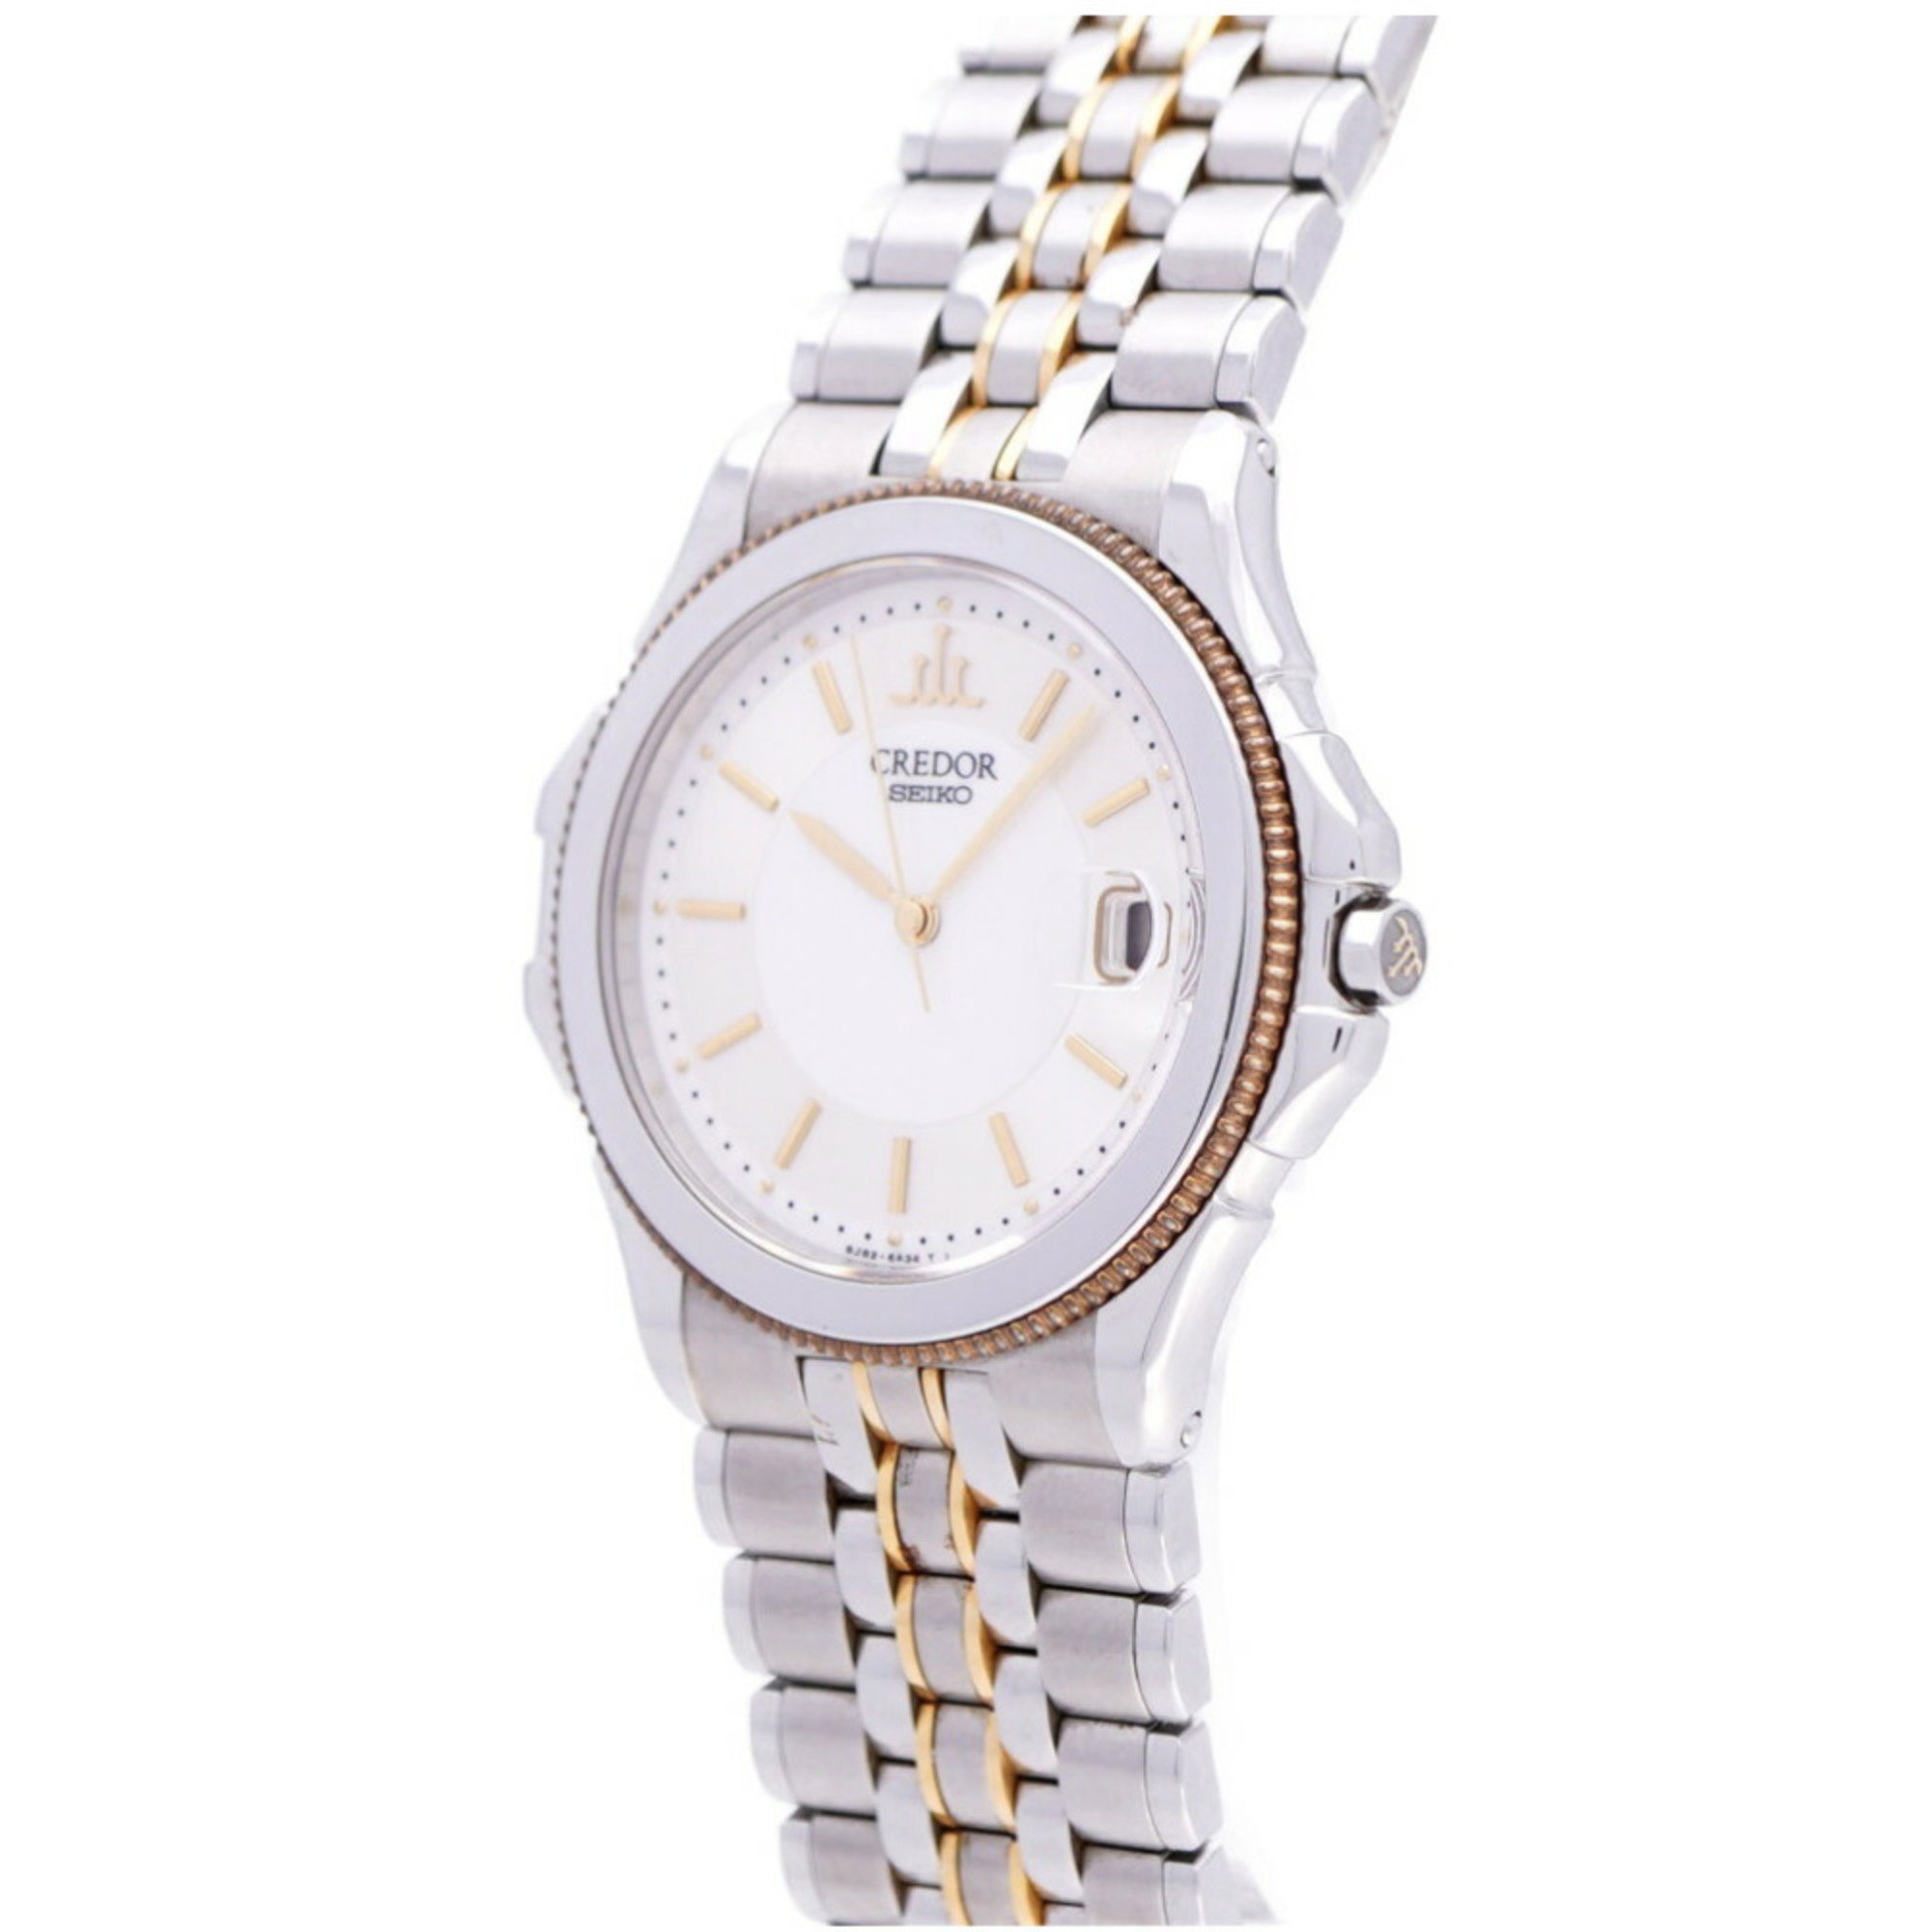 Seiko Credor Pacific 8J82-6A20 quartz watch K18/SS silver/gold